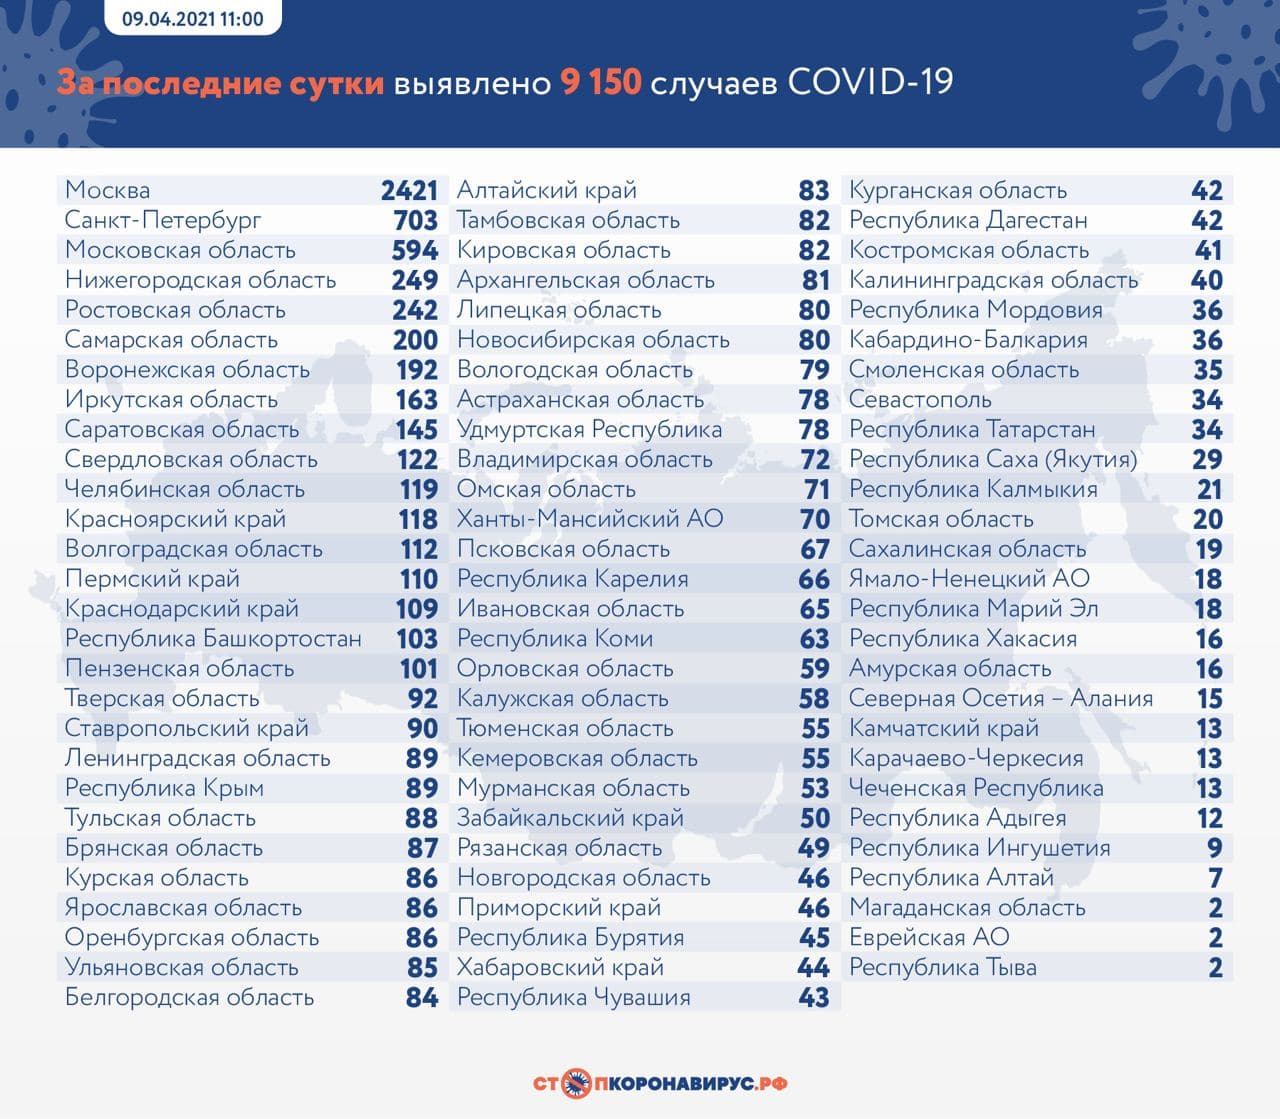 Оперативная статистика по коронавирусу в России на 9 апреля